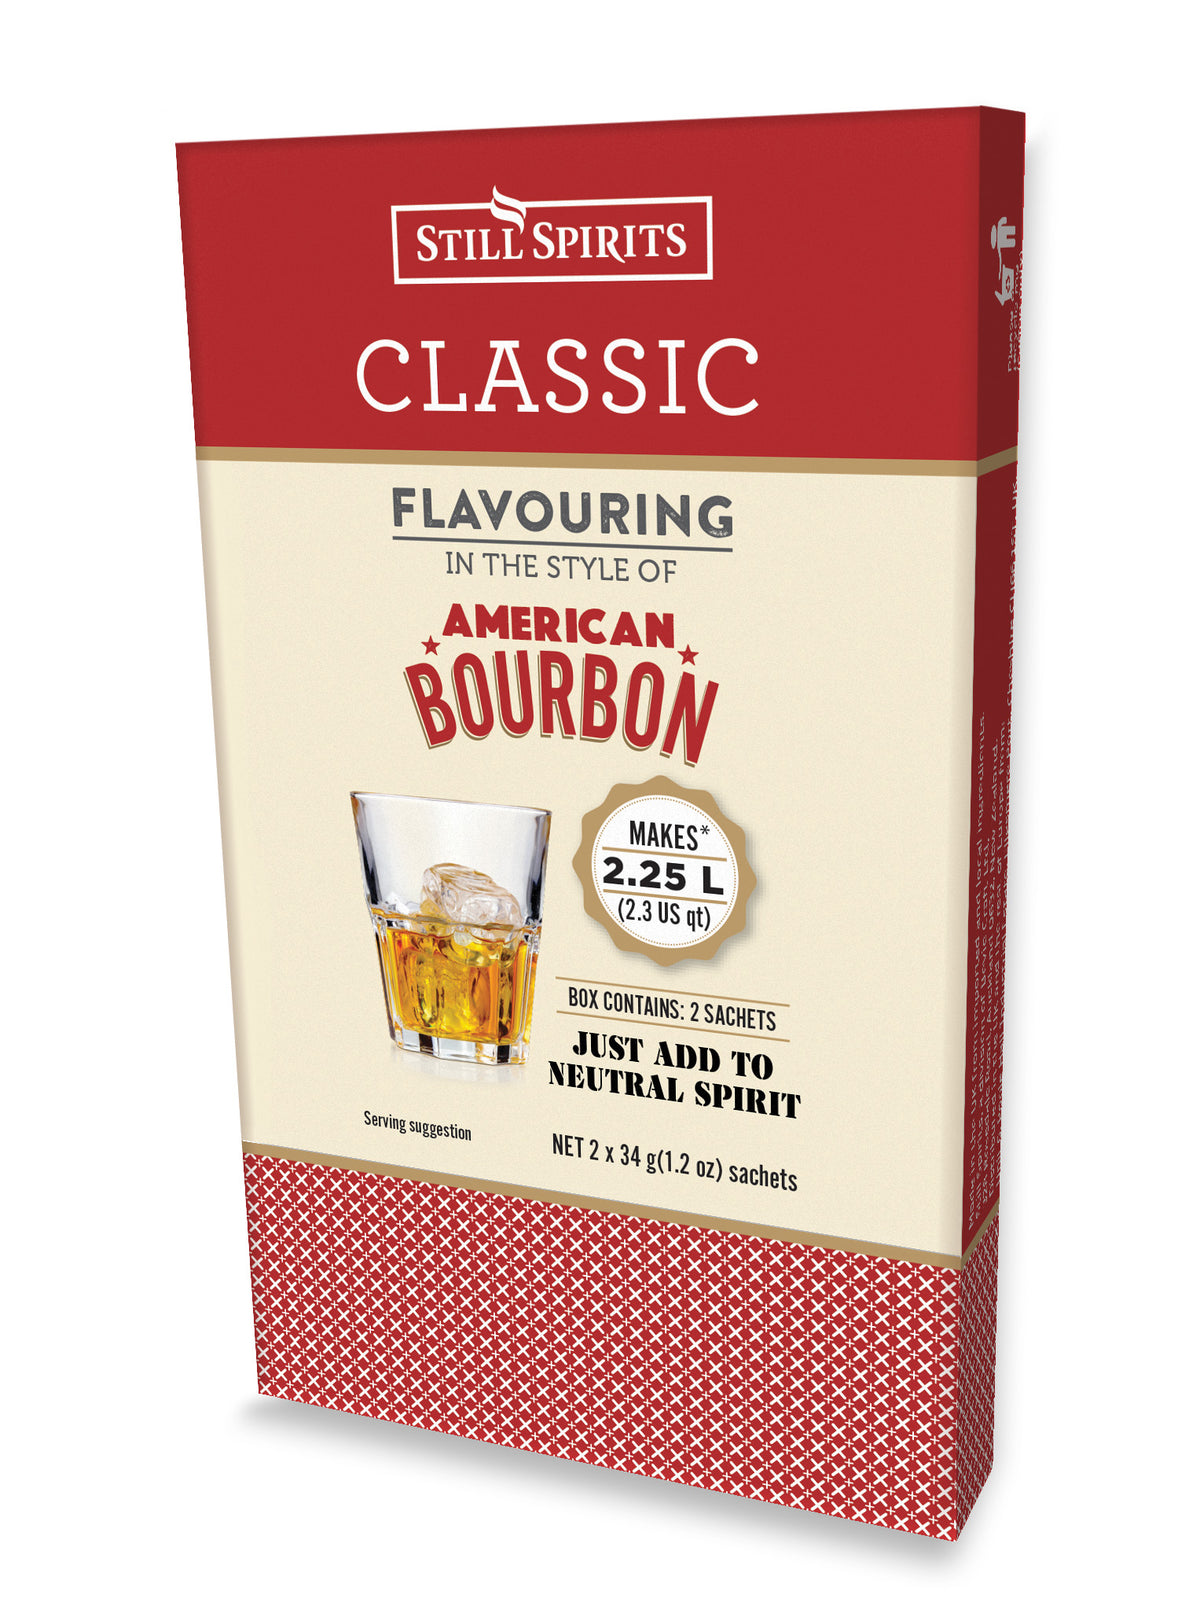 Still Spirits Classic American Bourbon Flavouring - All Things Fermented | Home Brew Shop NZ | Supplies | Equipment